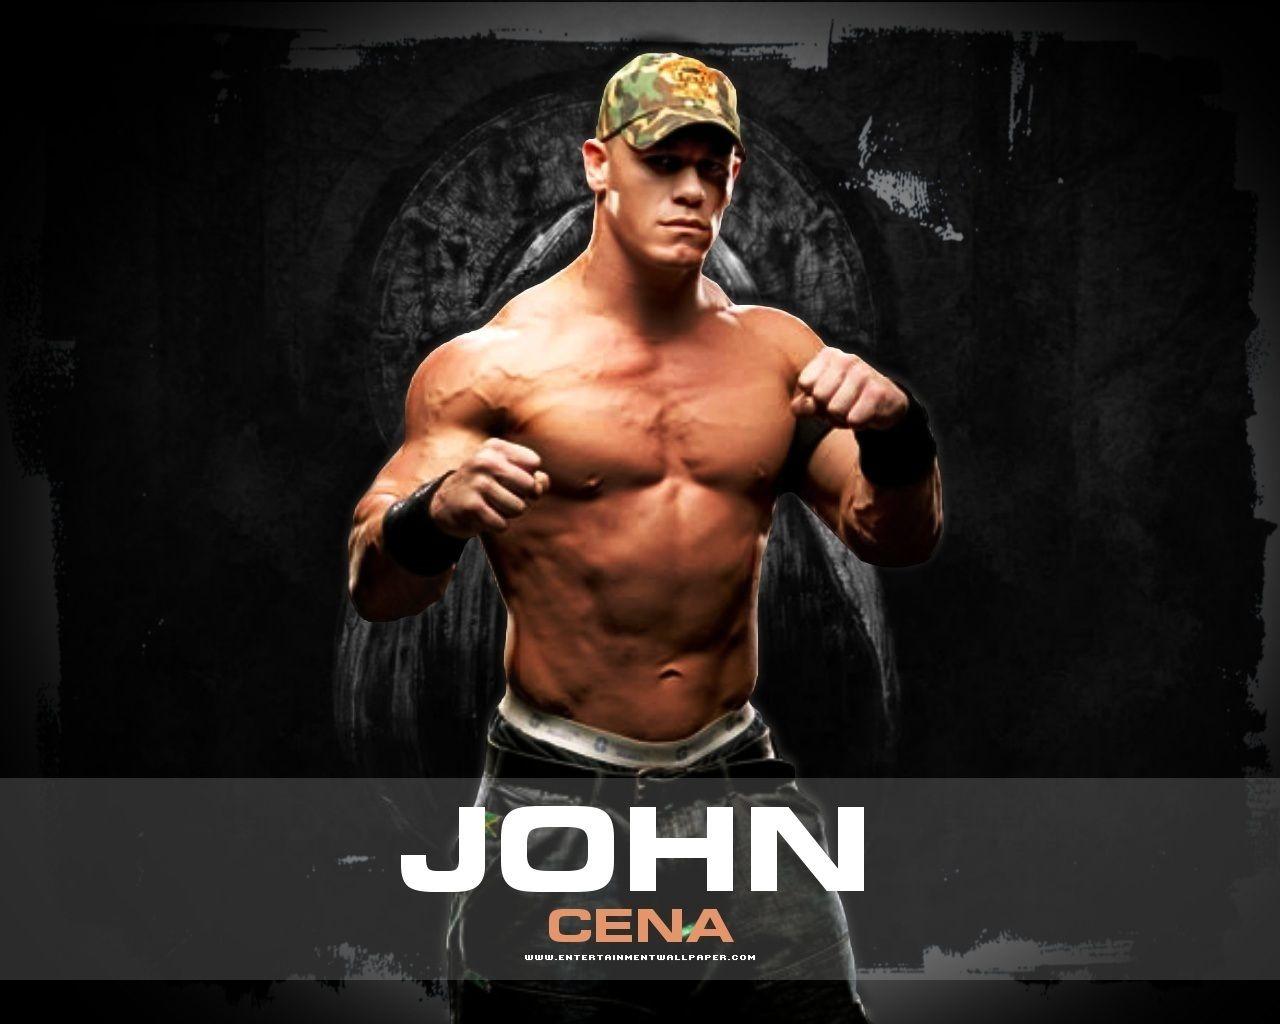 John Cena HD Wallpaper Wwe Sky Wallpaper On Full 2017 Pics Of